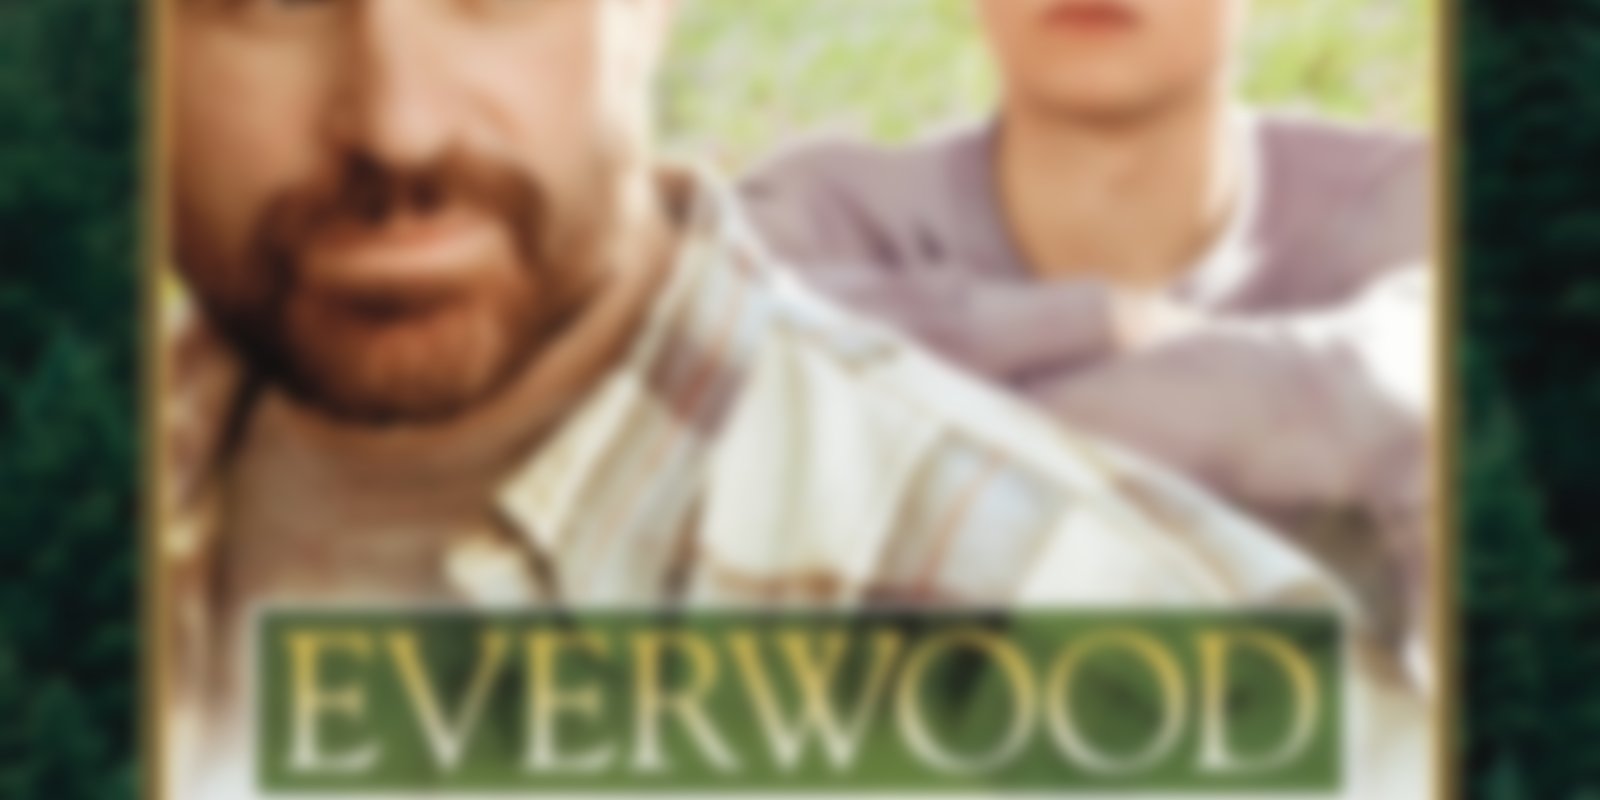 Everwood - Staffel 2